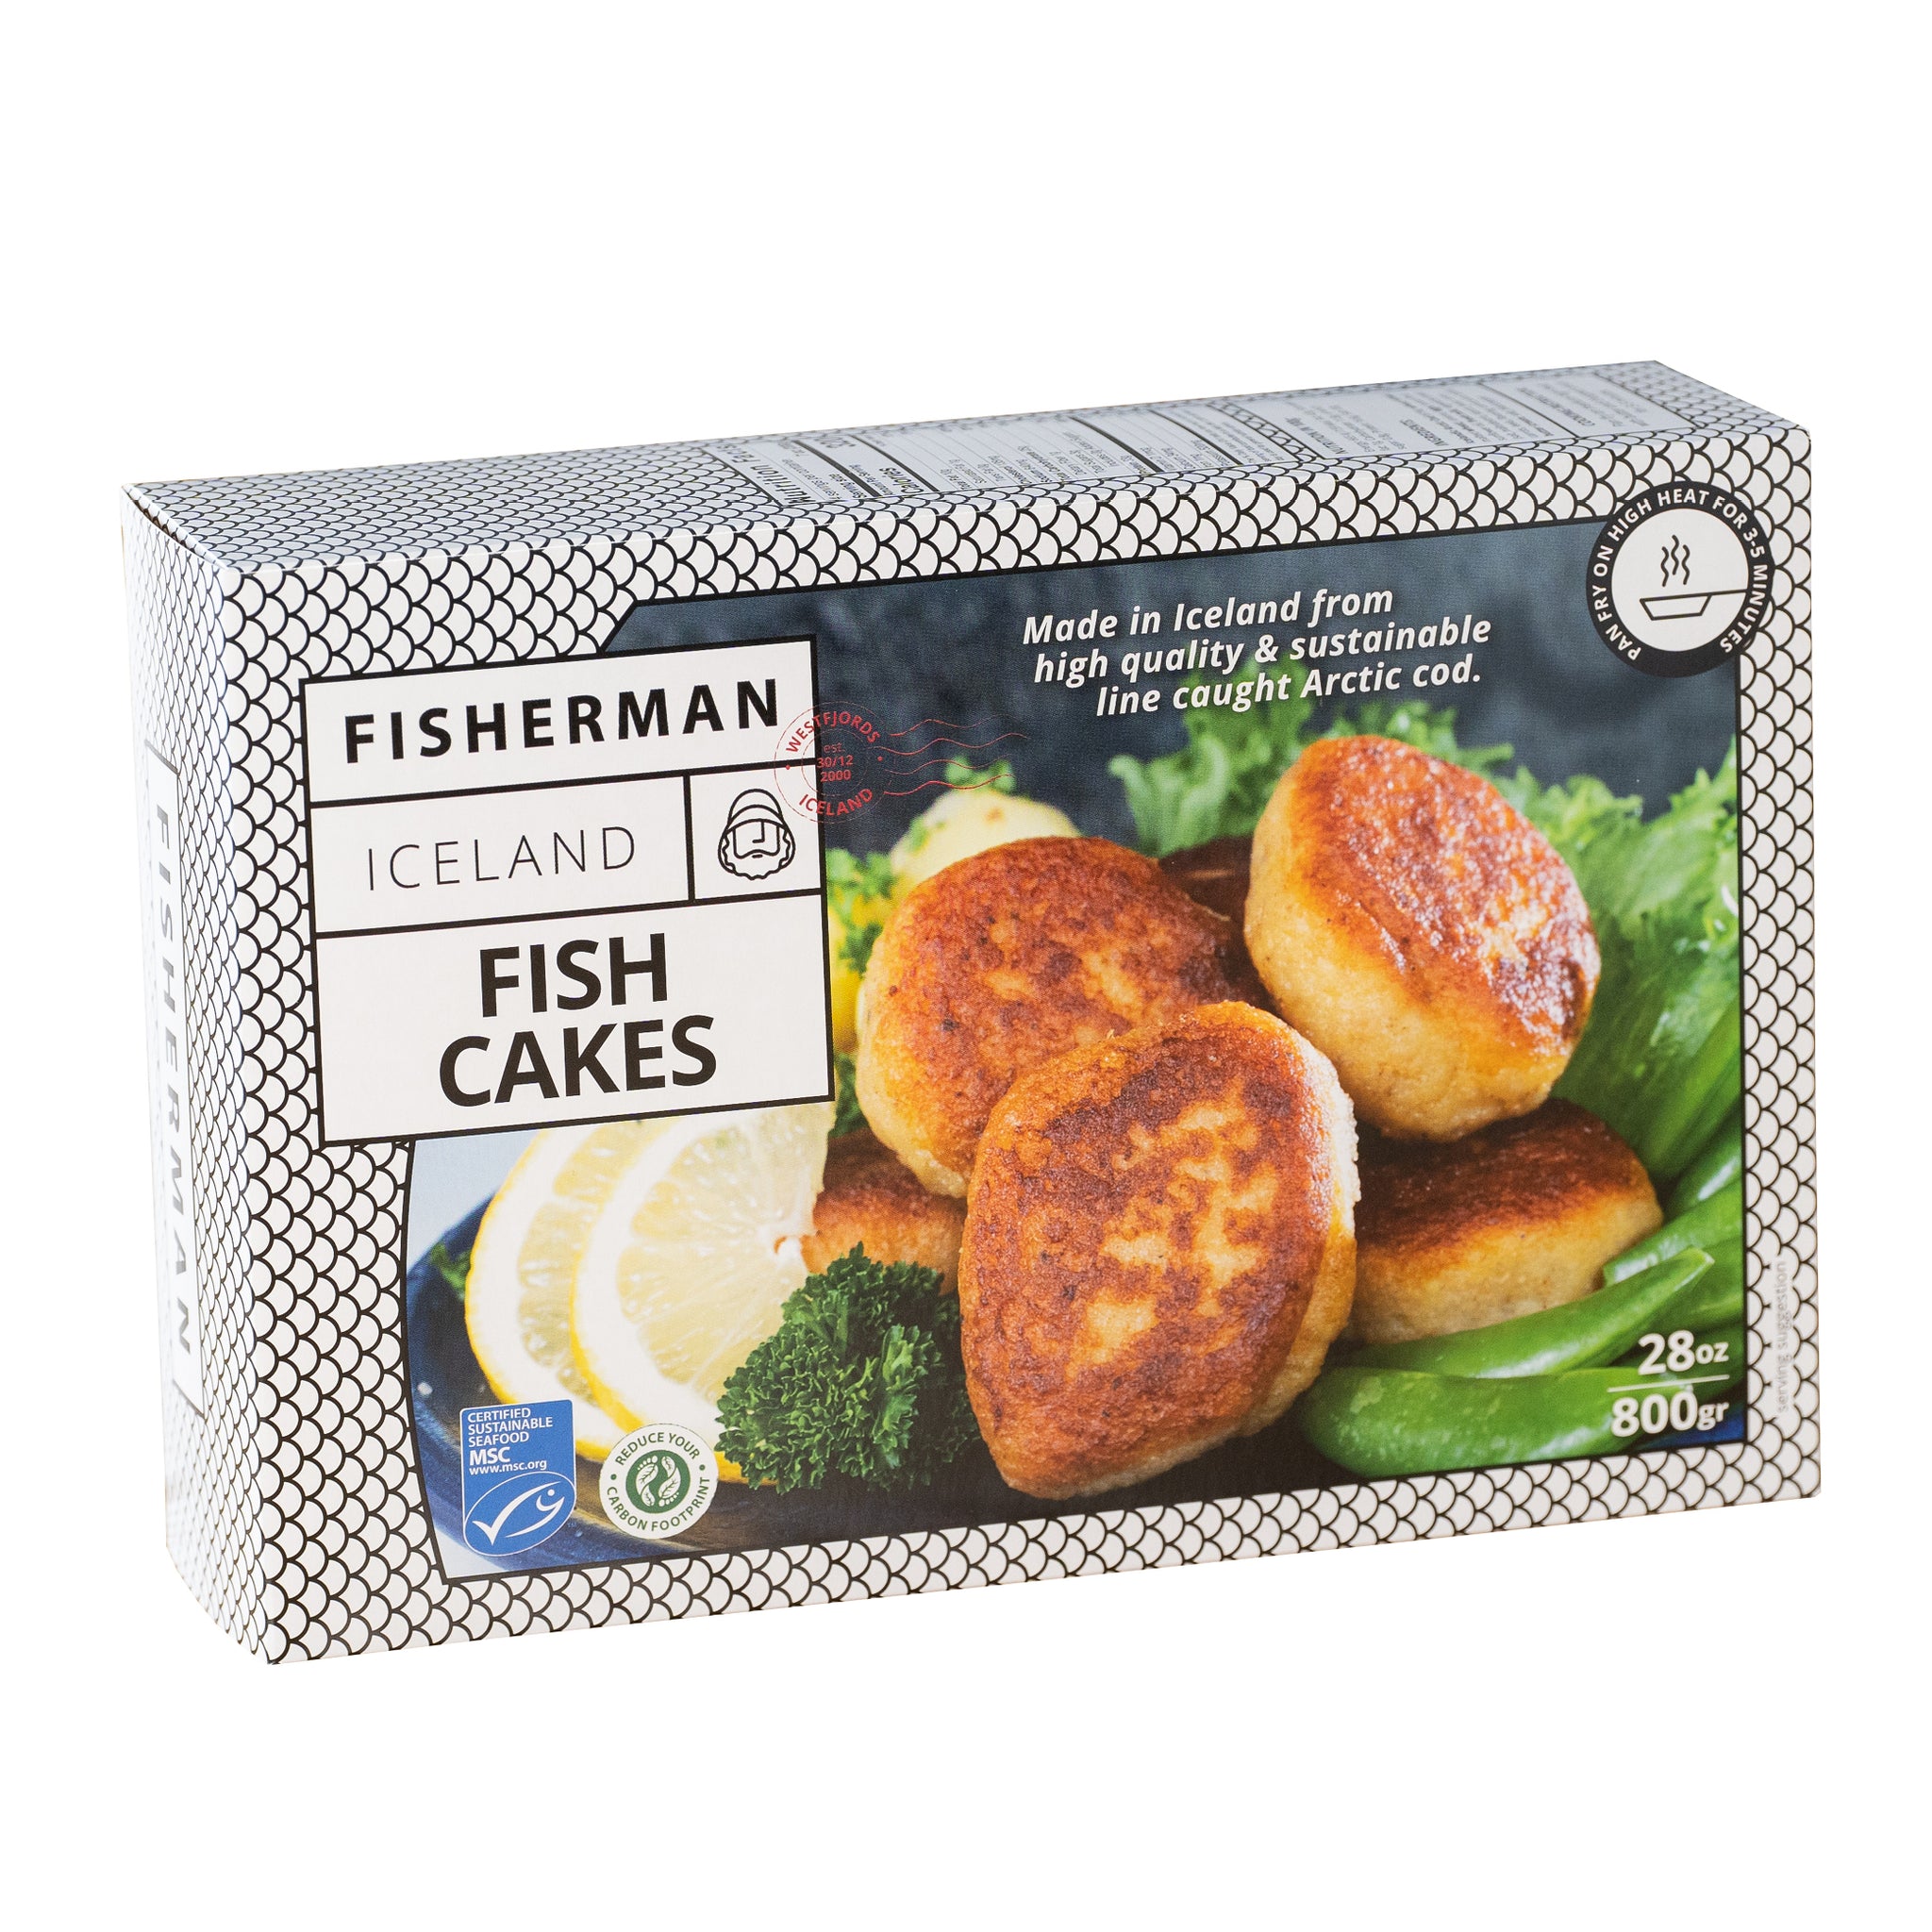 Fisherman Iceland fish cakes delivered in handy smartbox -  FishermanIceland-EN